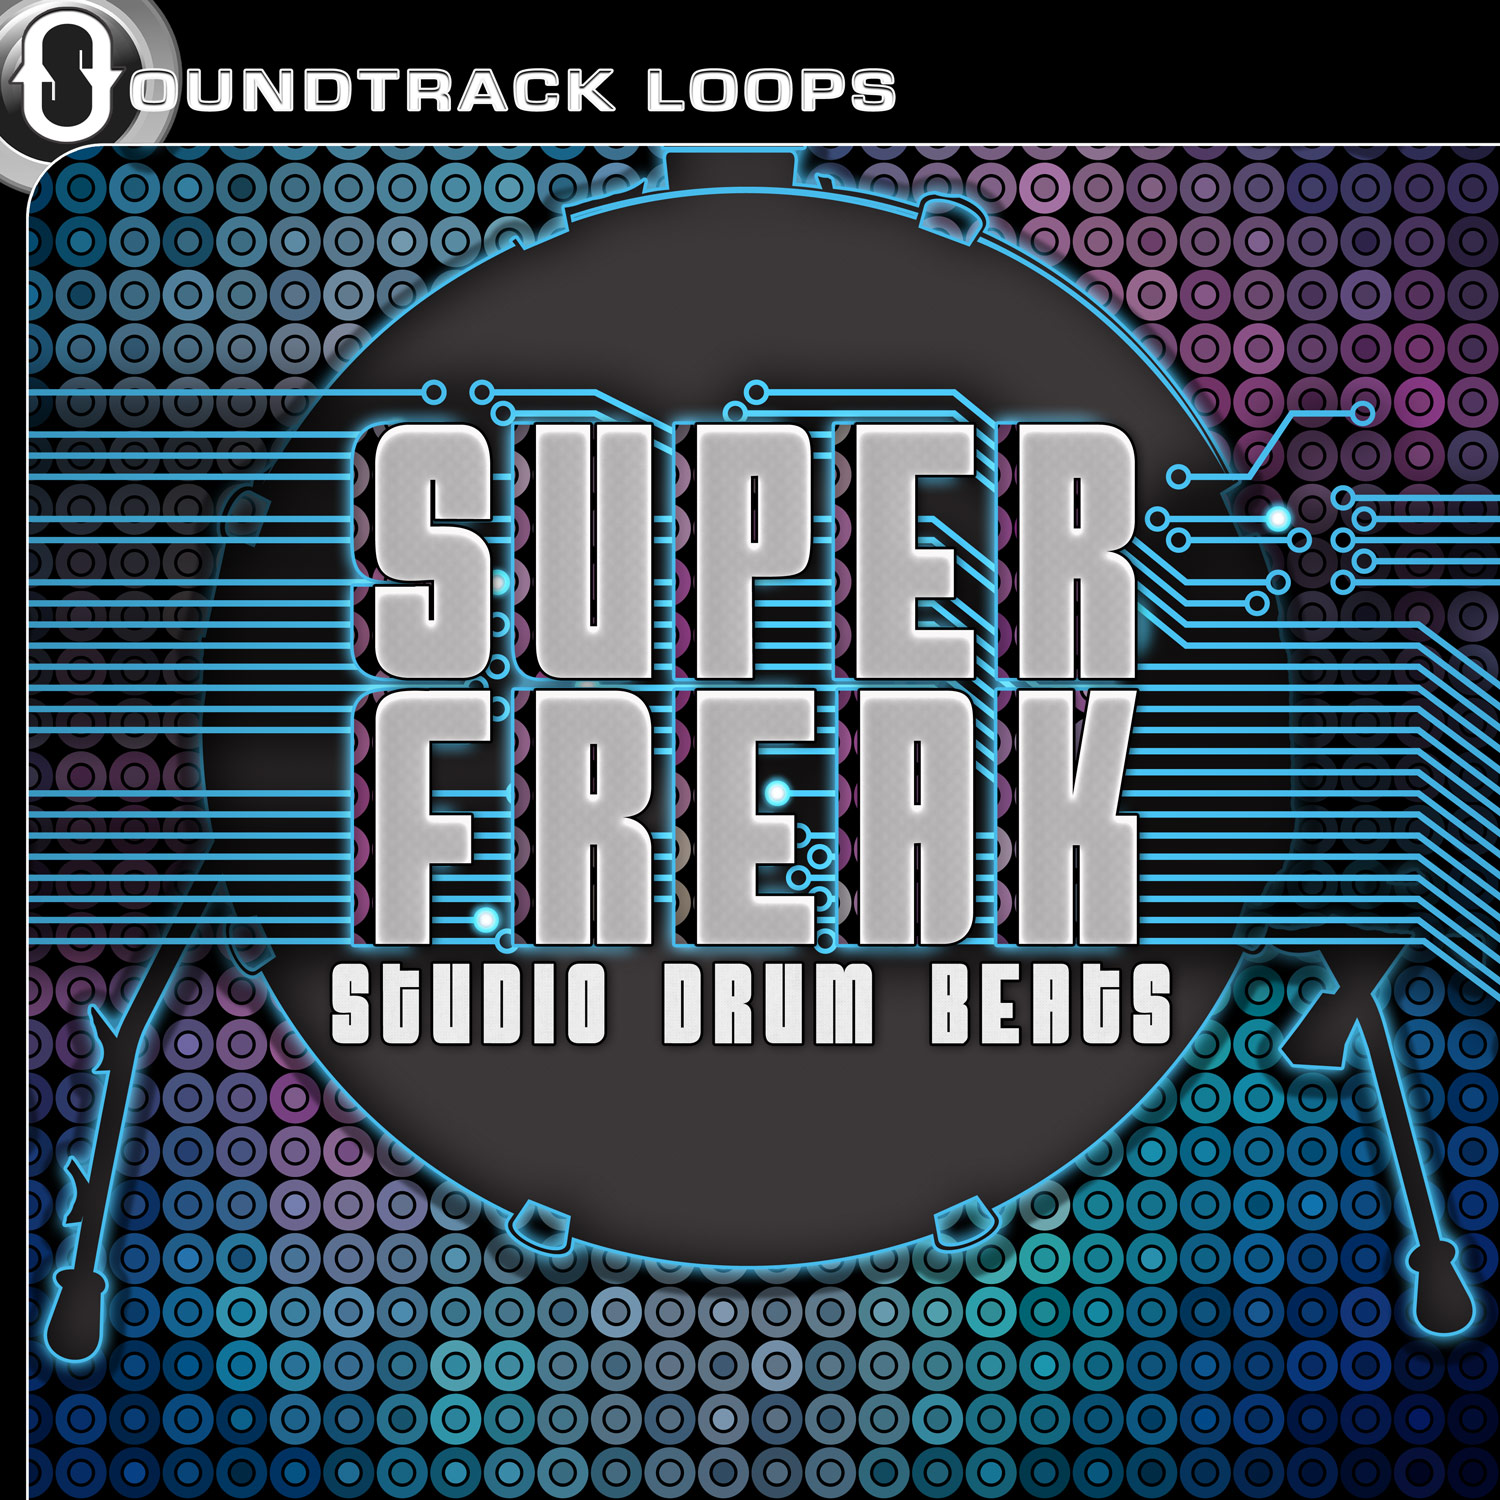 Super Freak Studio Drum Beats-0